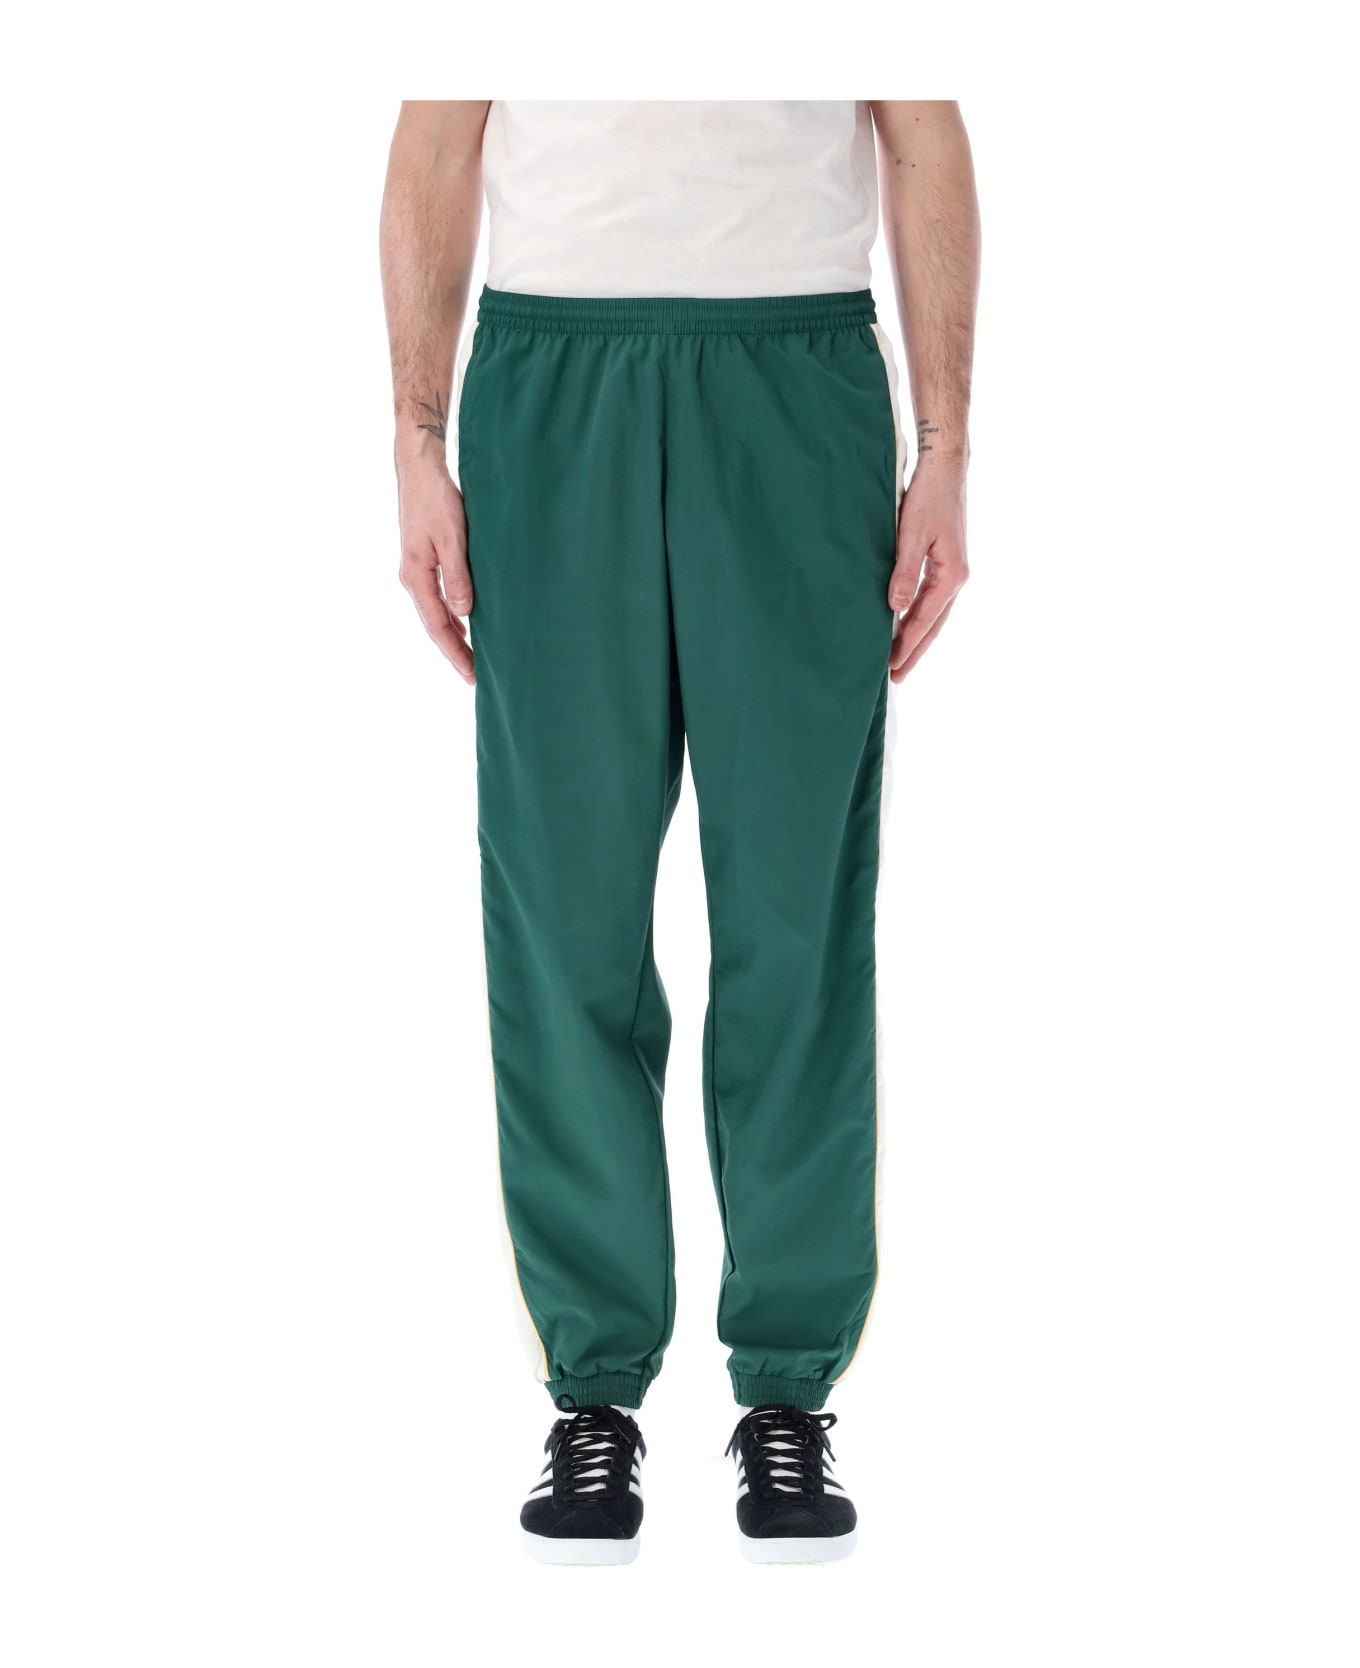 Adidas Originals Jogging Pants - GREEN スウェットパンツ